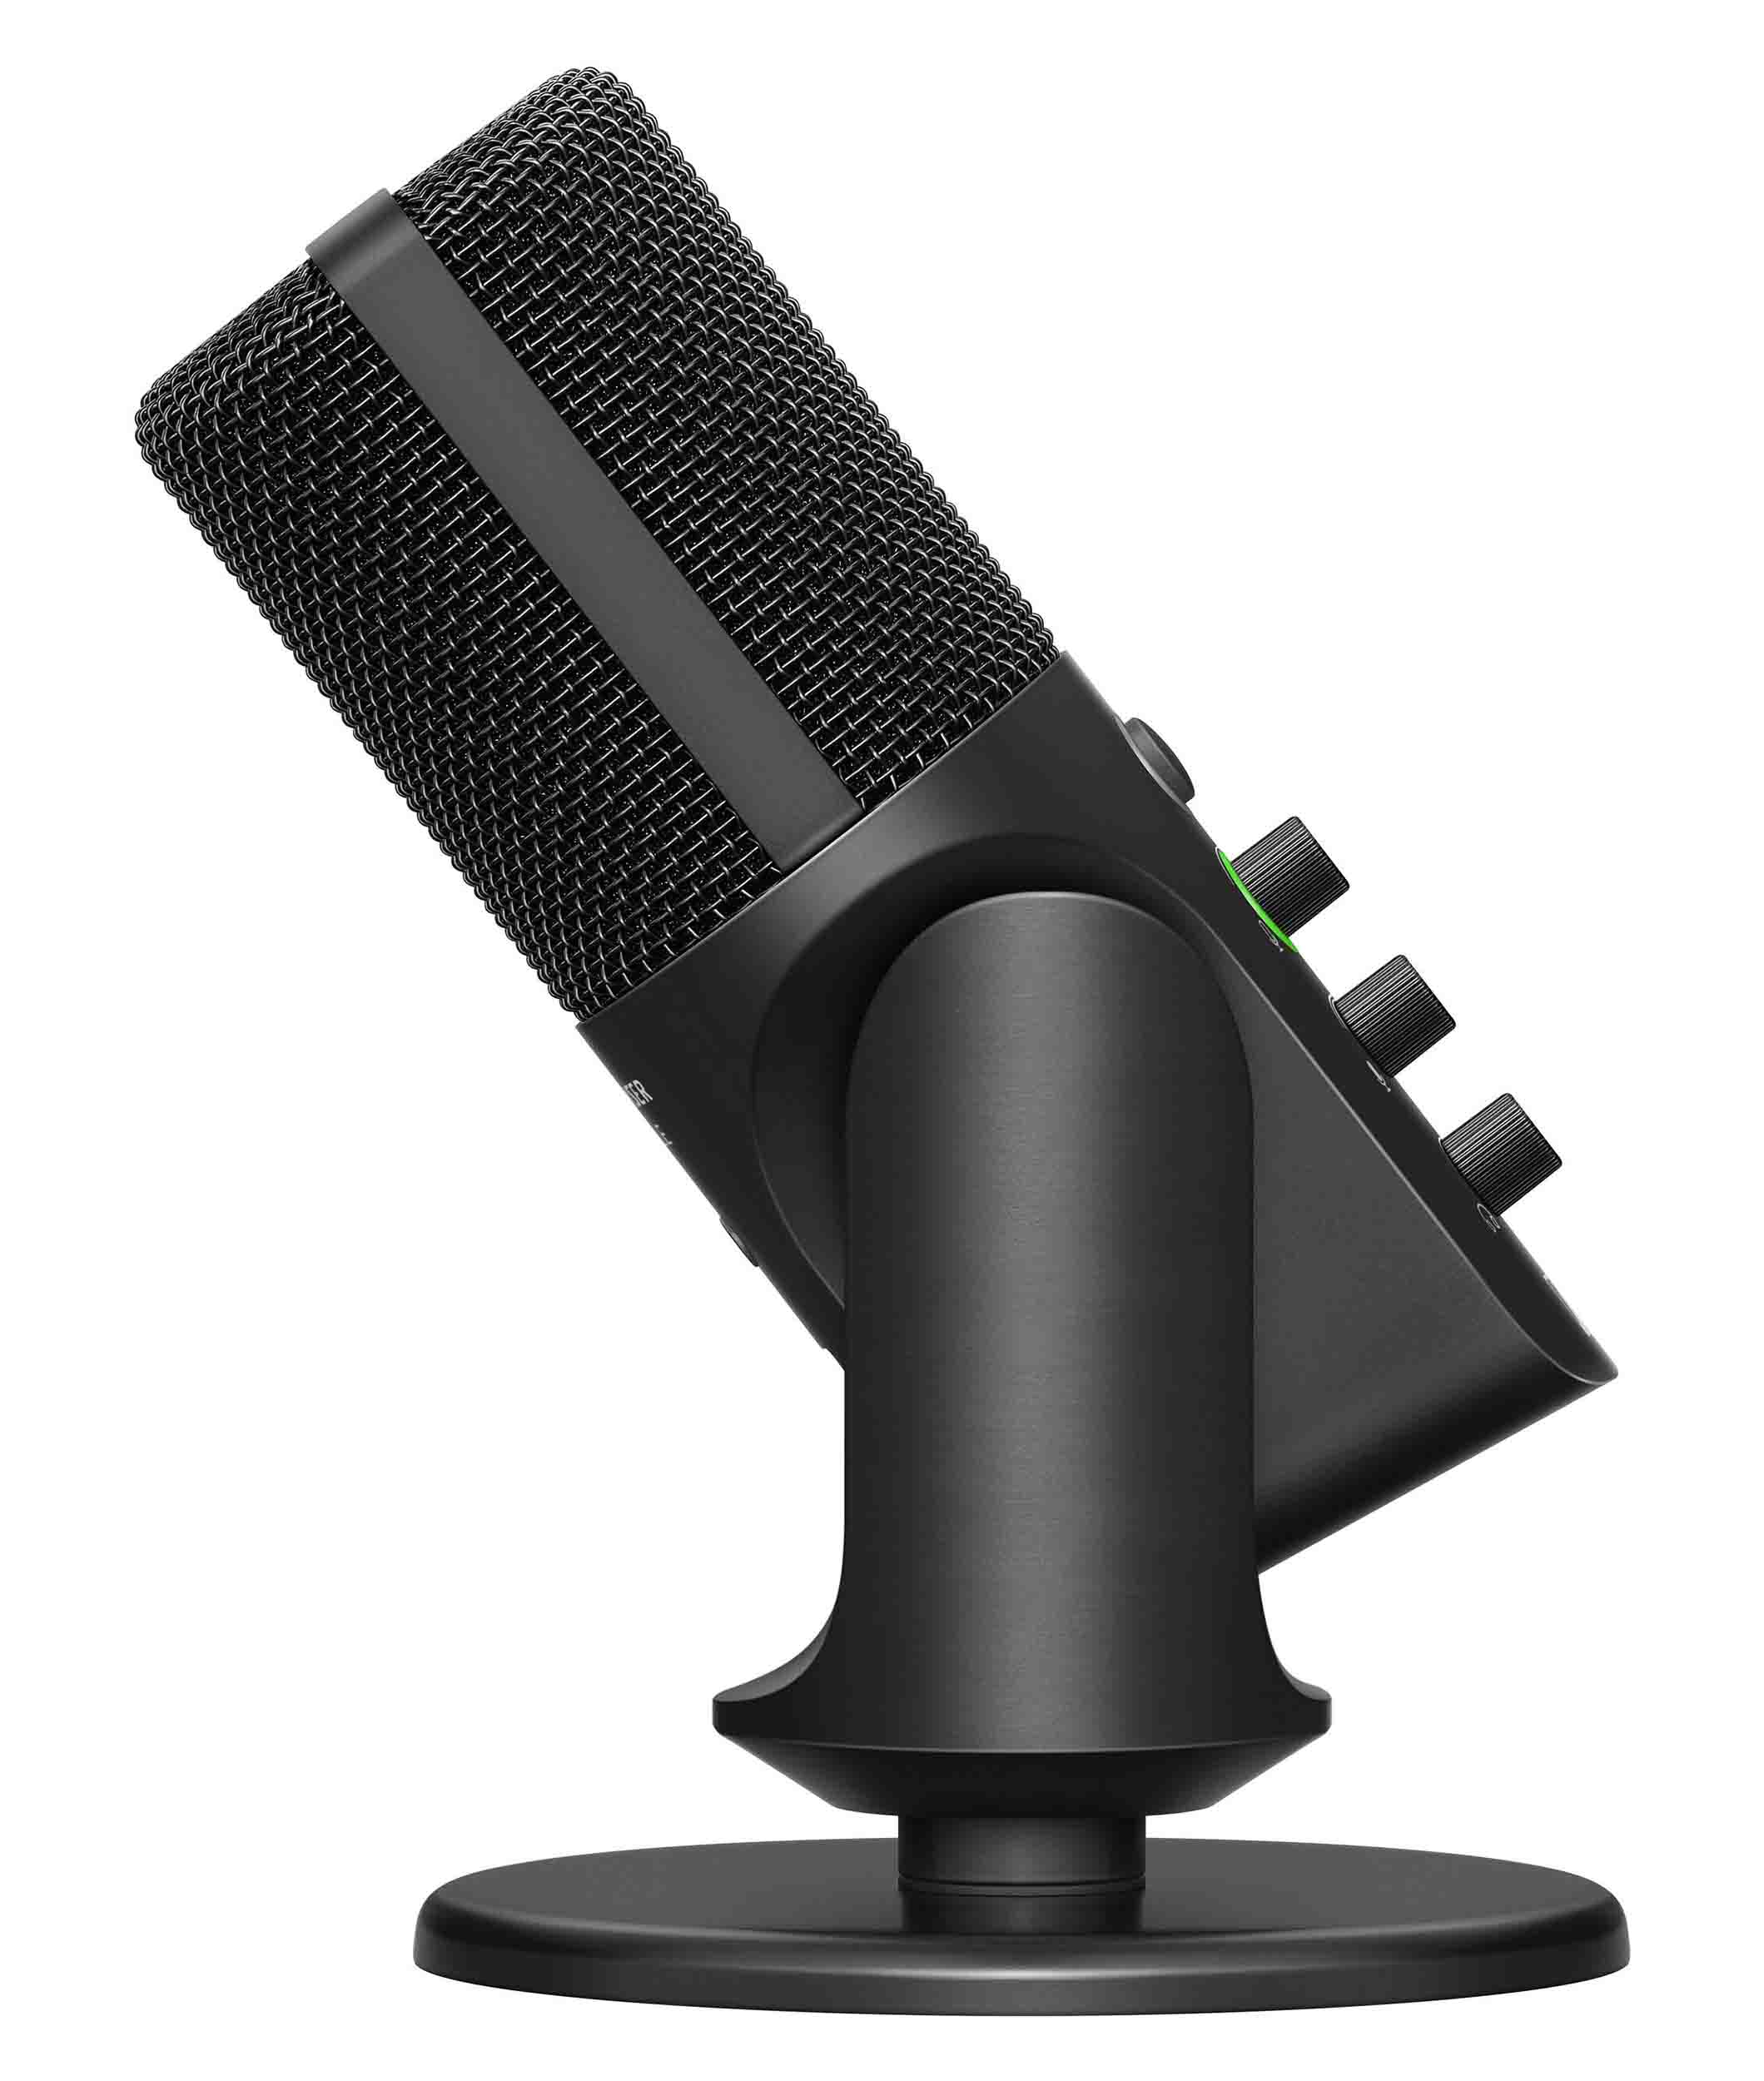 Sennheiser PROFILE STREAMING SET, Profile USB Condenser Microphone Streaming Set with Boom Arm - Hollywood DJ